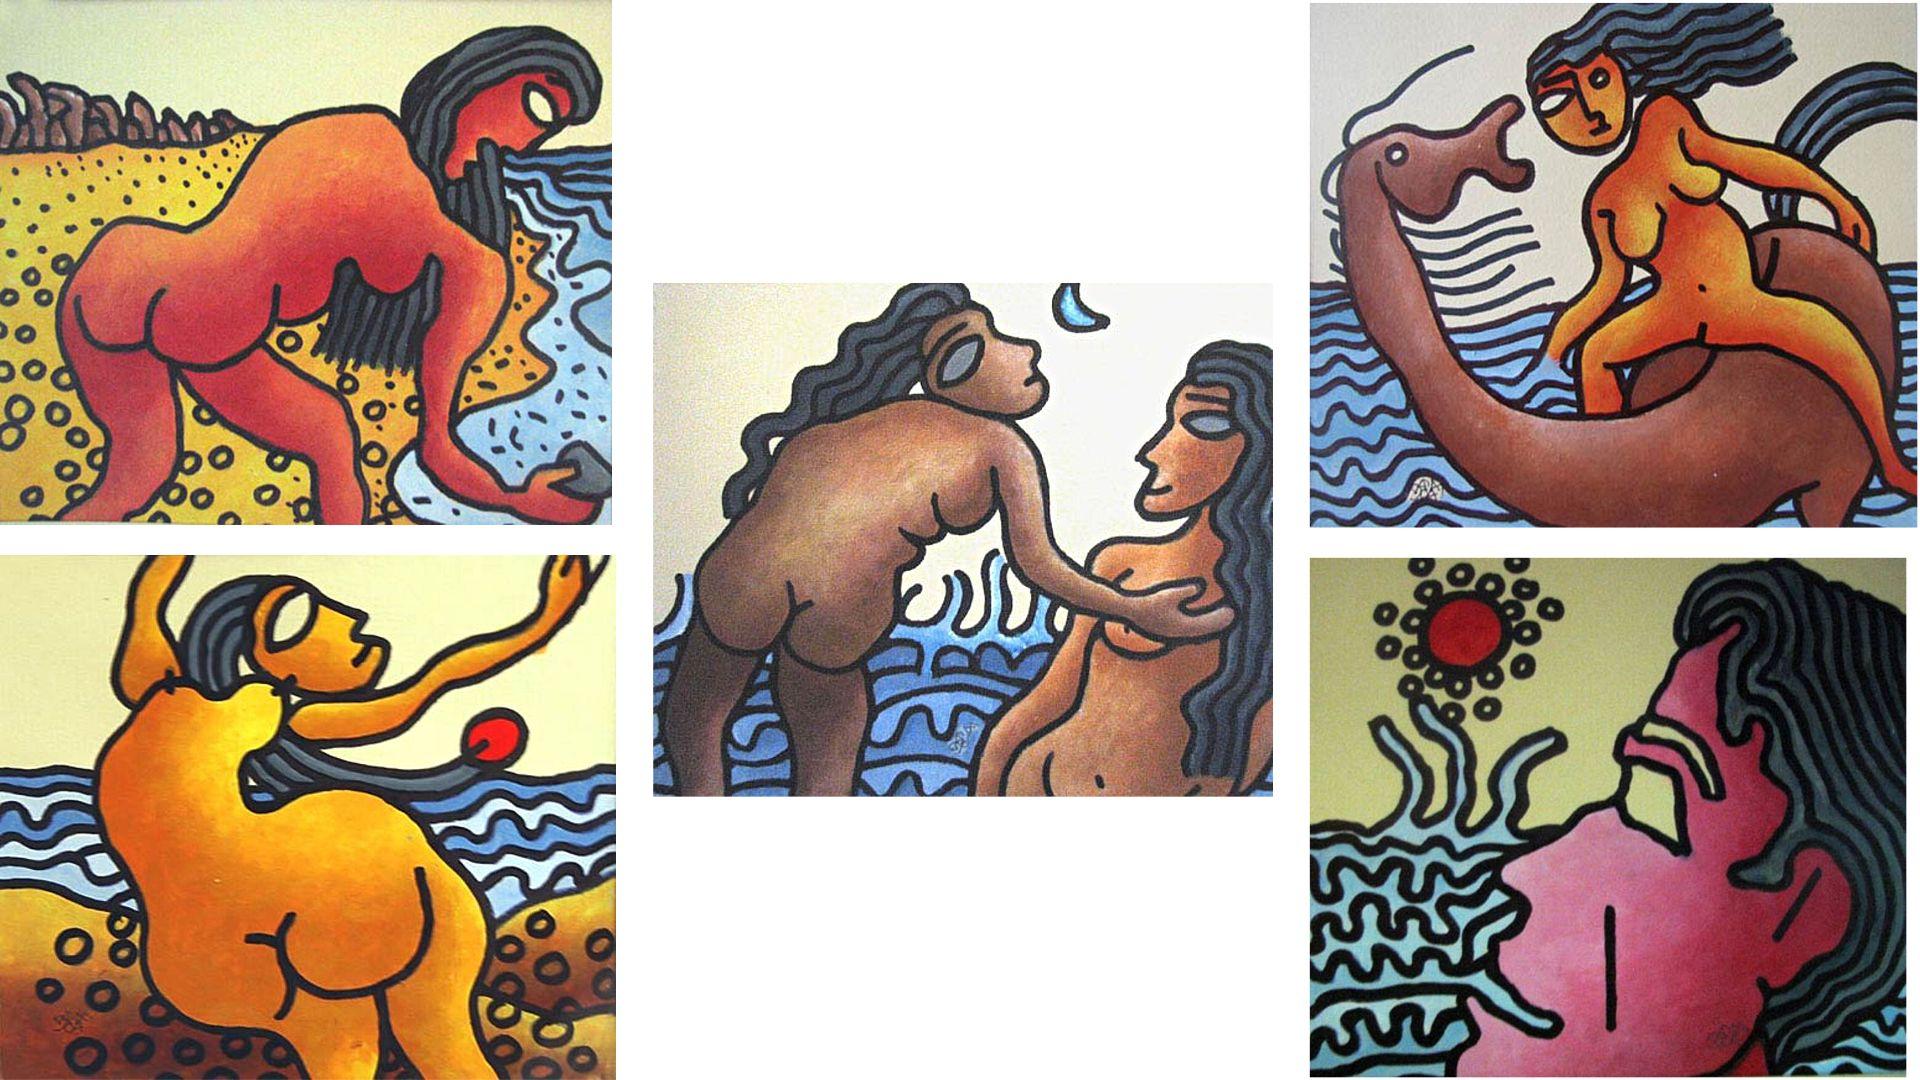 Prakash Karmarkar Nude Painting - Beach Series, Mixed Media on Paper Set of 5 works Master Indian Artist"In Stock"